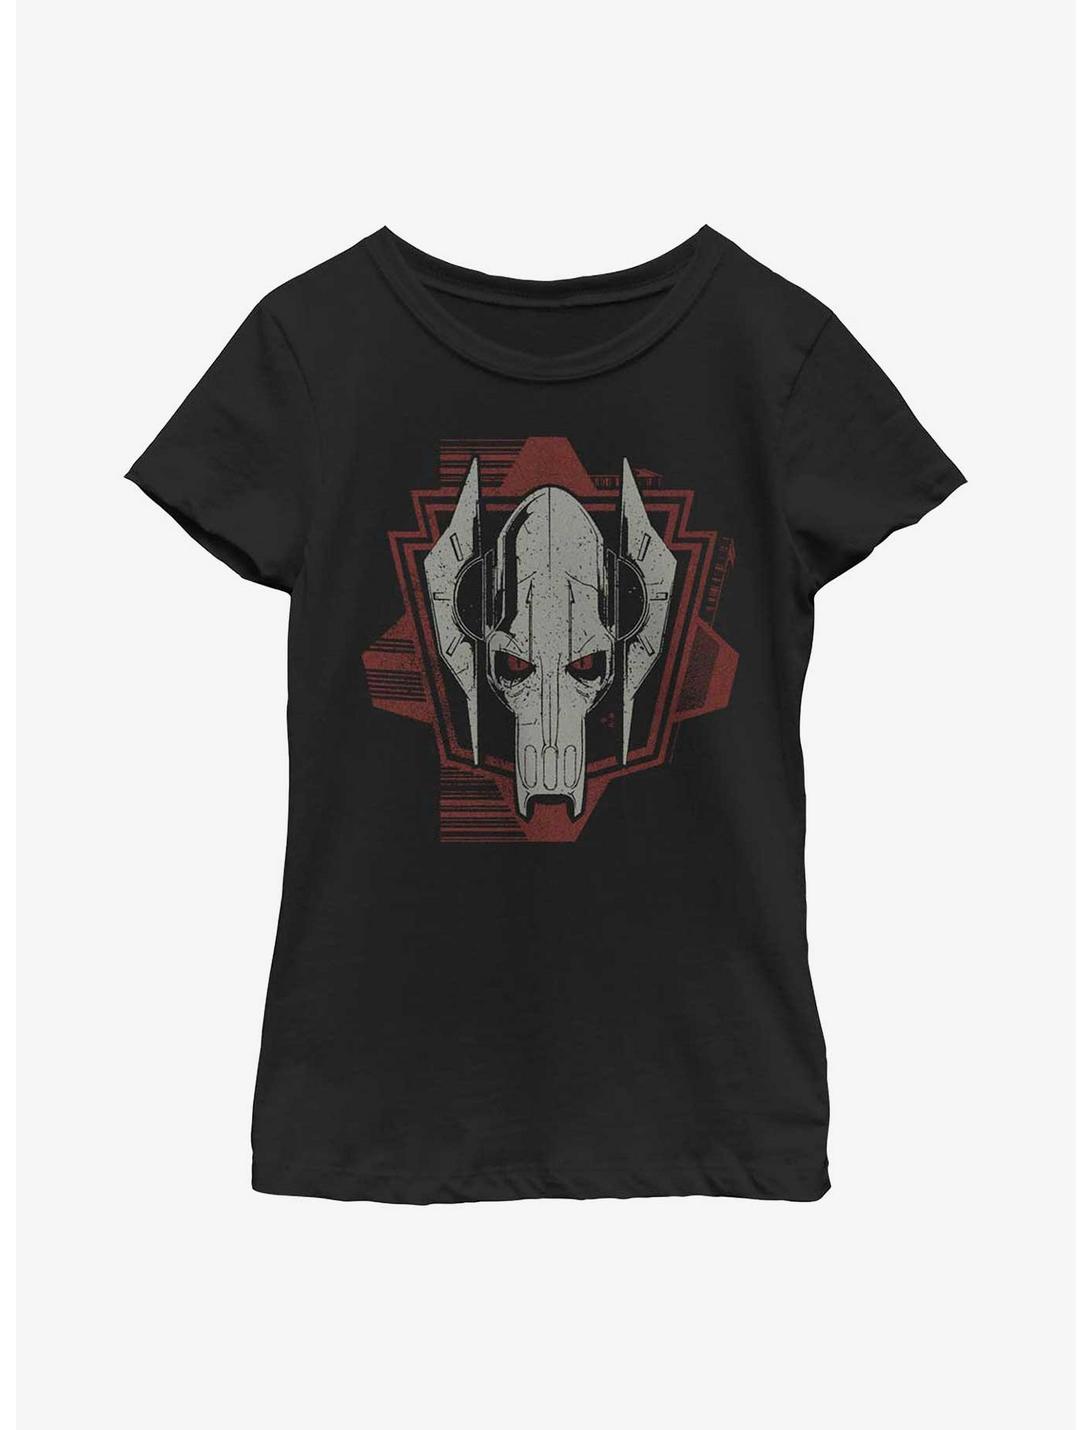 Star Wars General Grievous Error Youth Girls T-Shirt, BLACK, hi-res